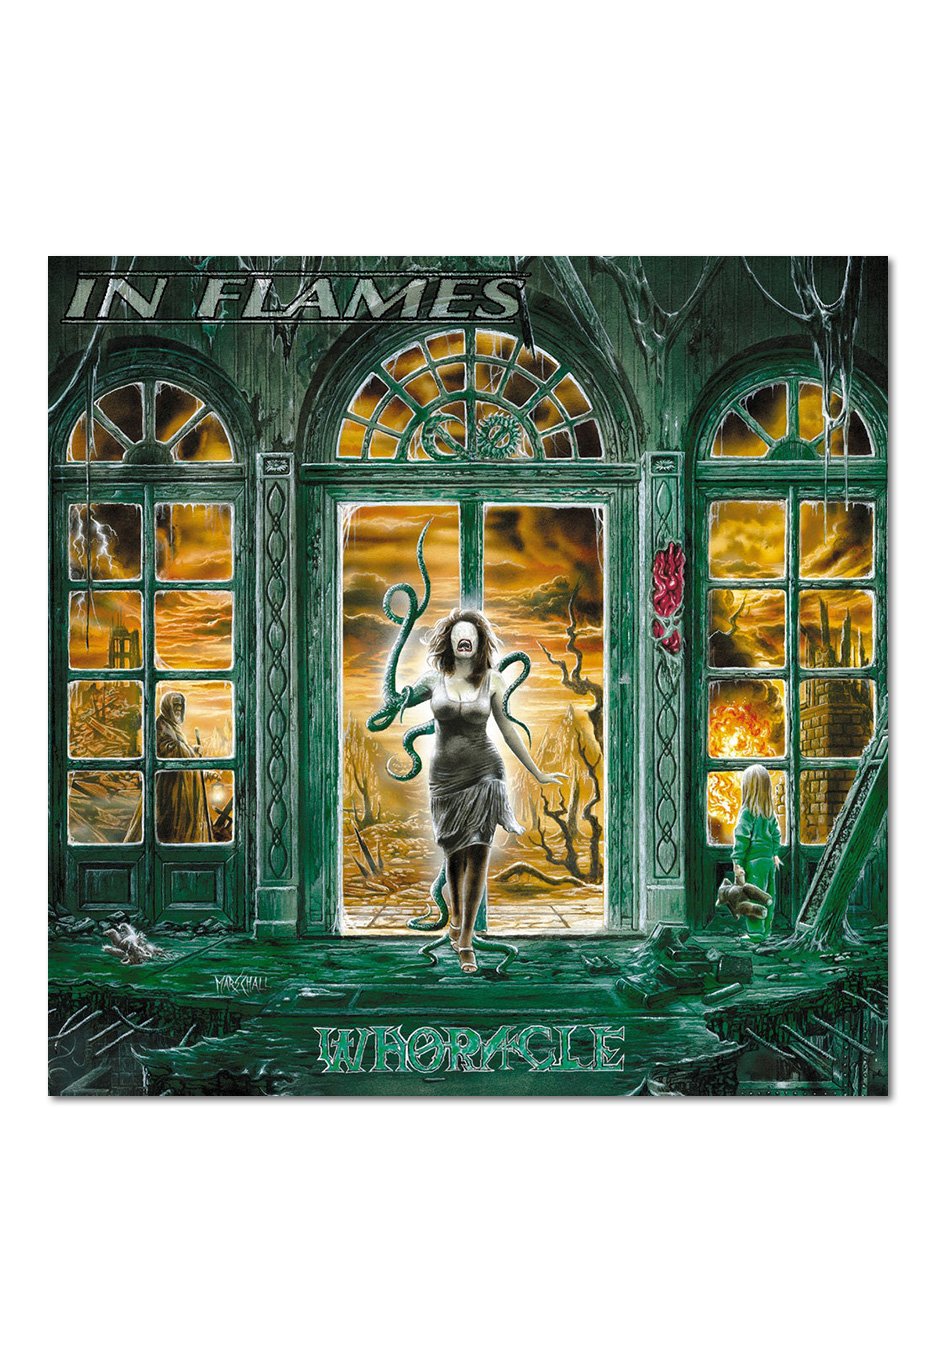 In Flames - Whoracle - CD